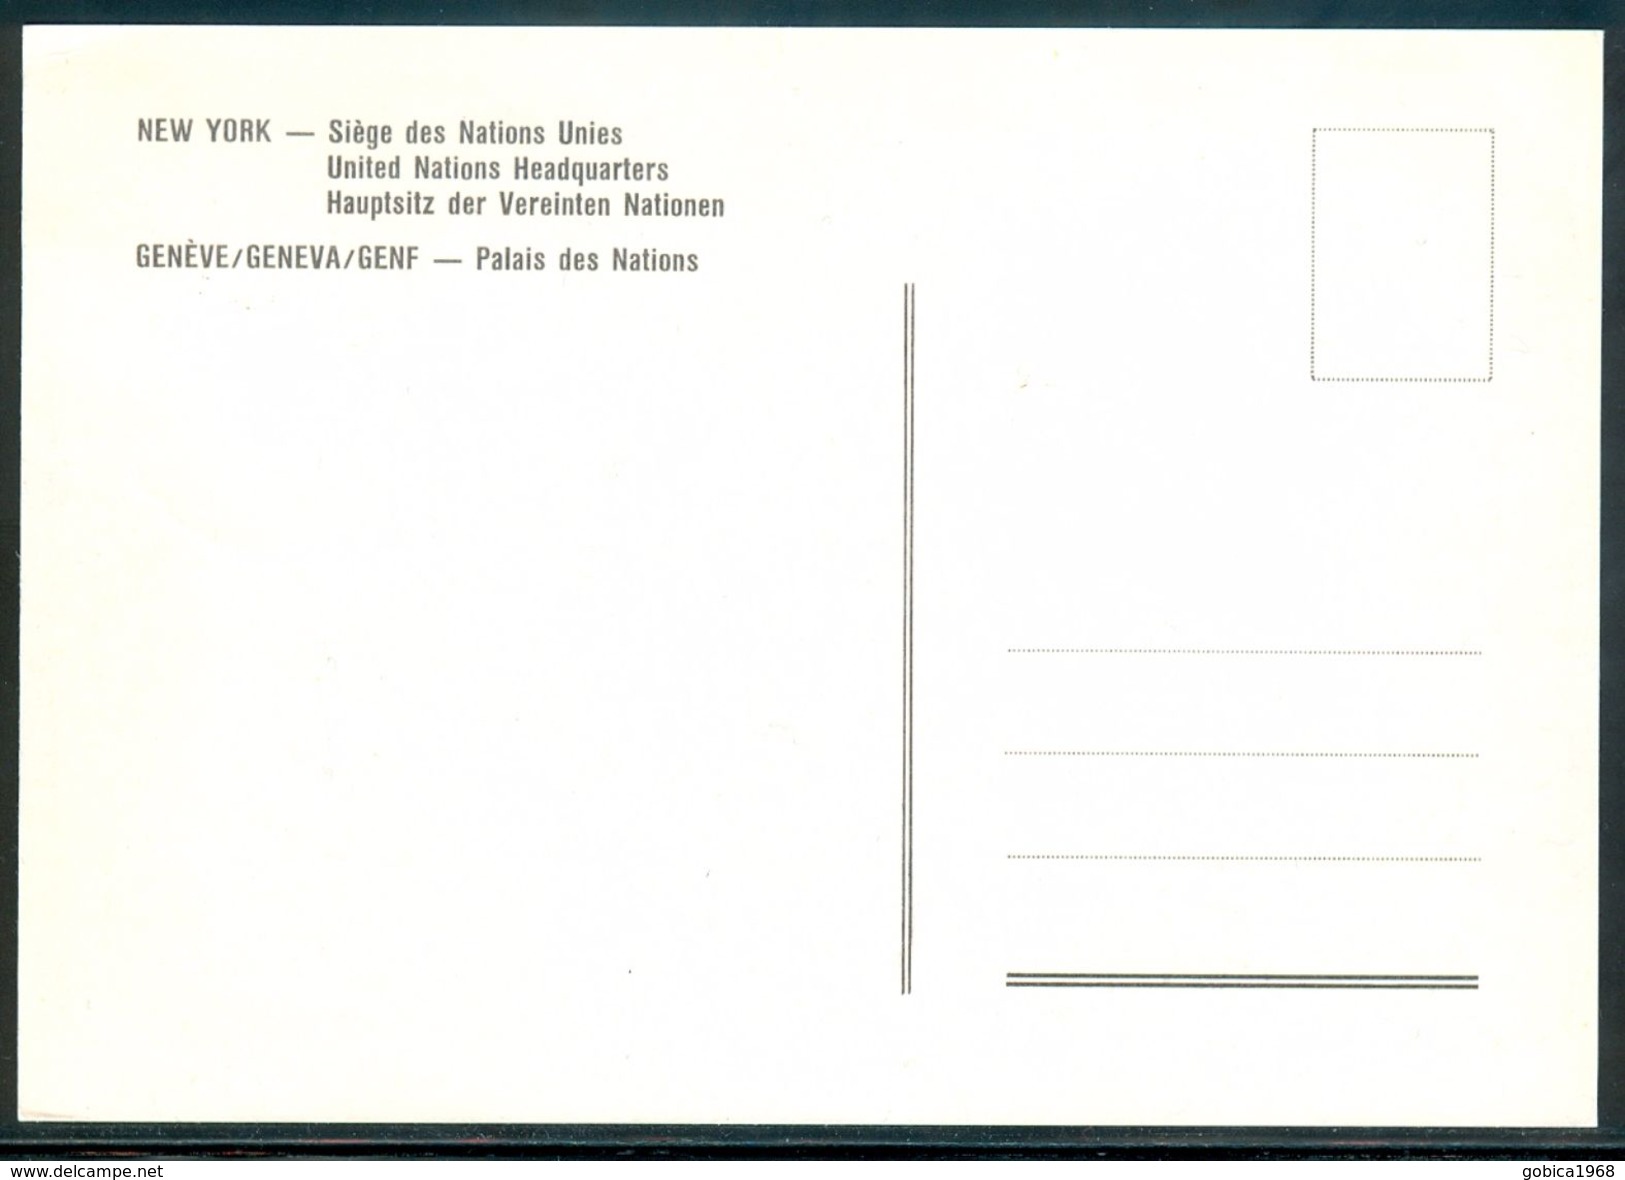 United Nations Office Geneva Maximum Card CM Peace-keeping Operations UN Emblem And “UN” On Helmet - Maximum Cards